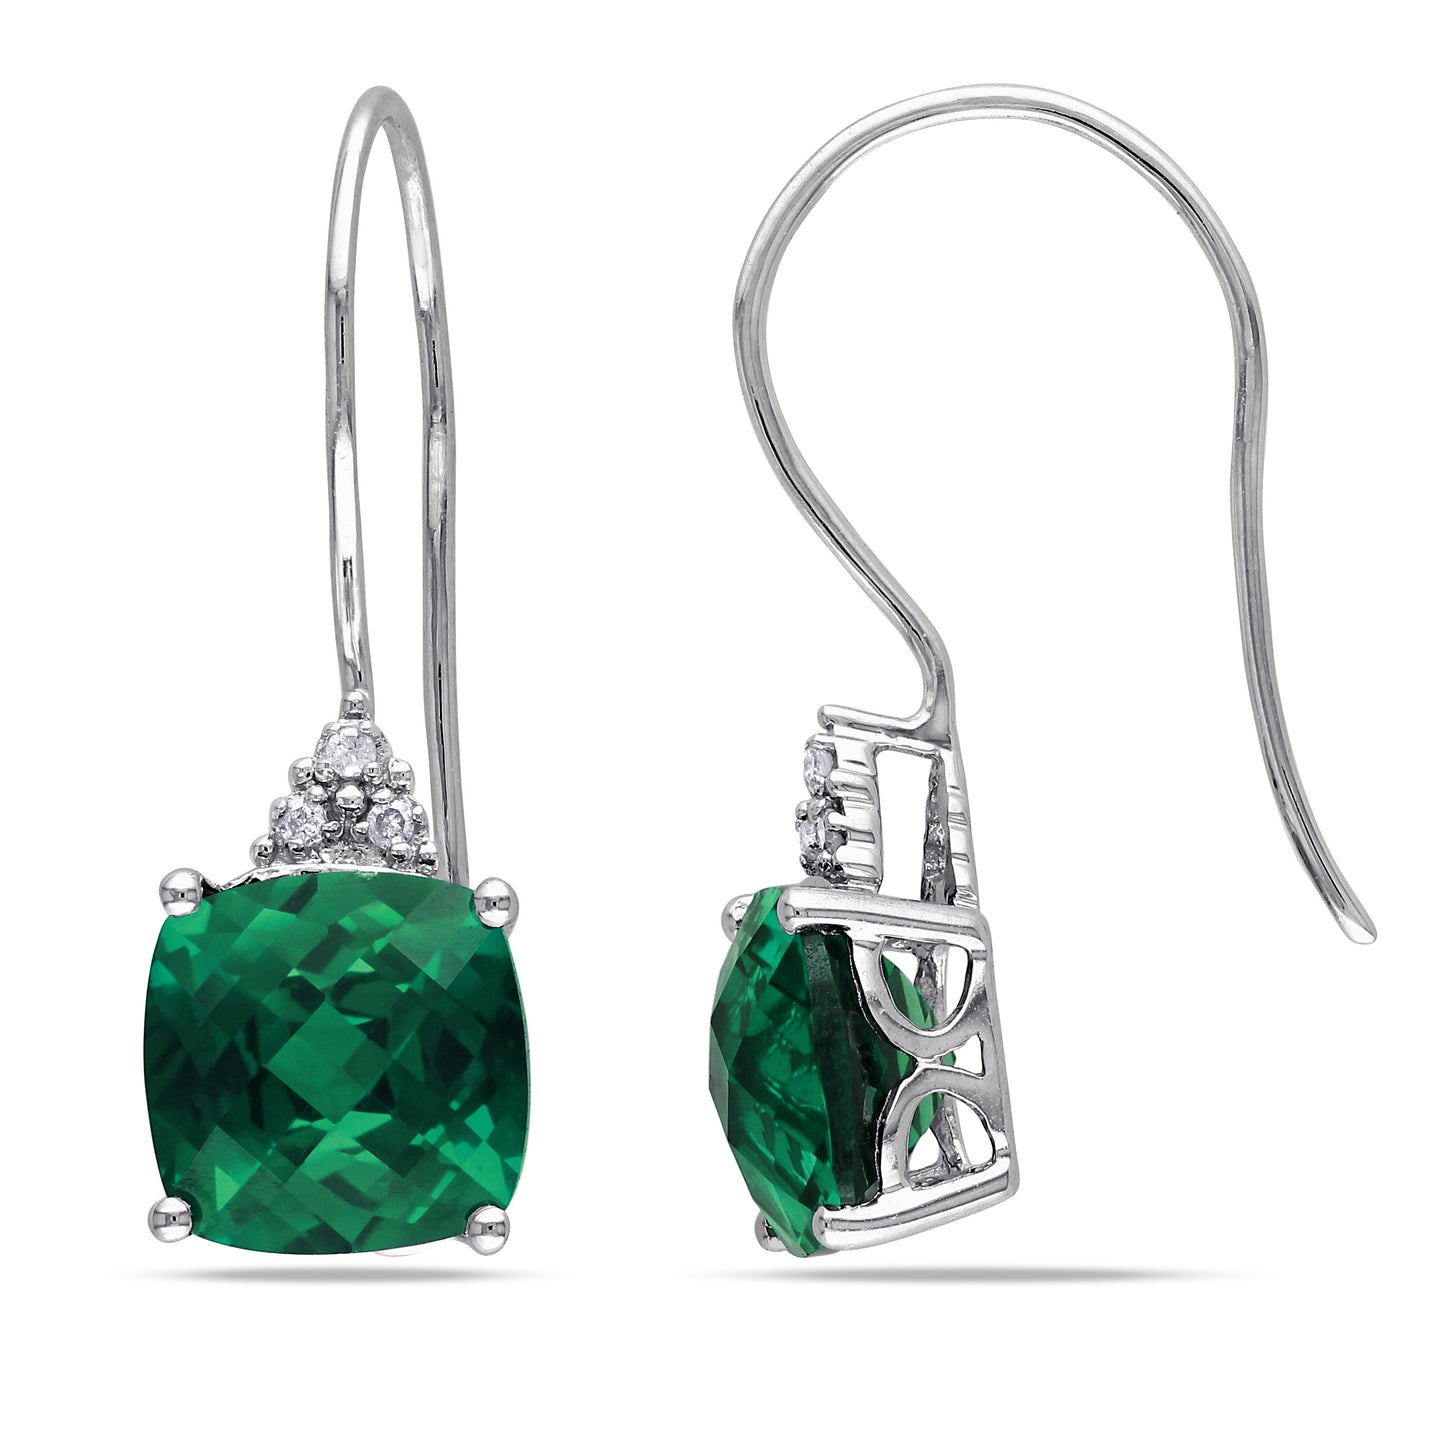 Cushion Cut Created Emerald & Diamond Earrings in 10k White Gold